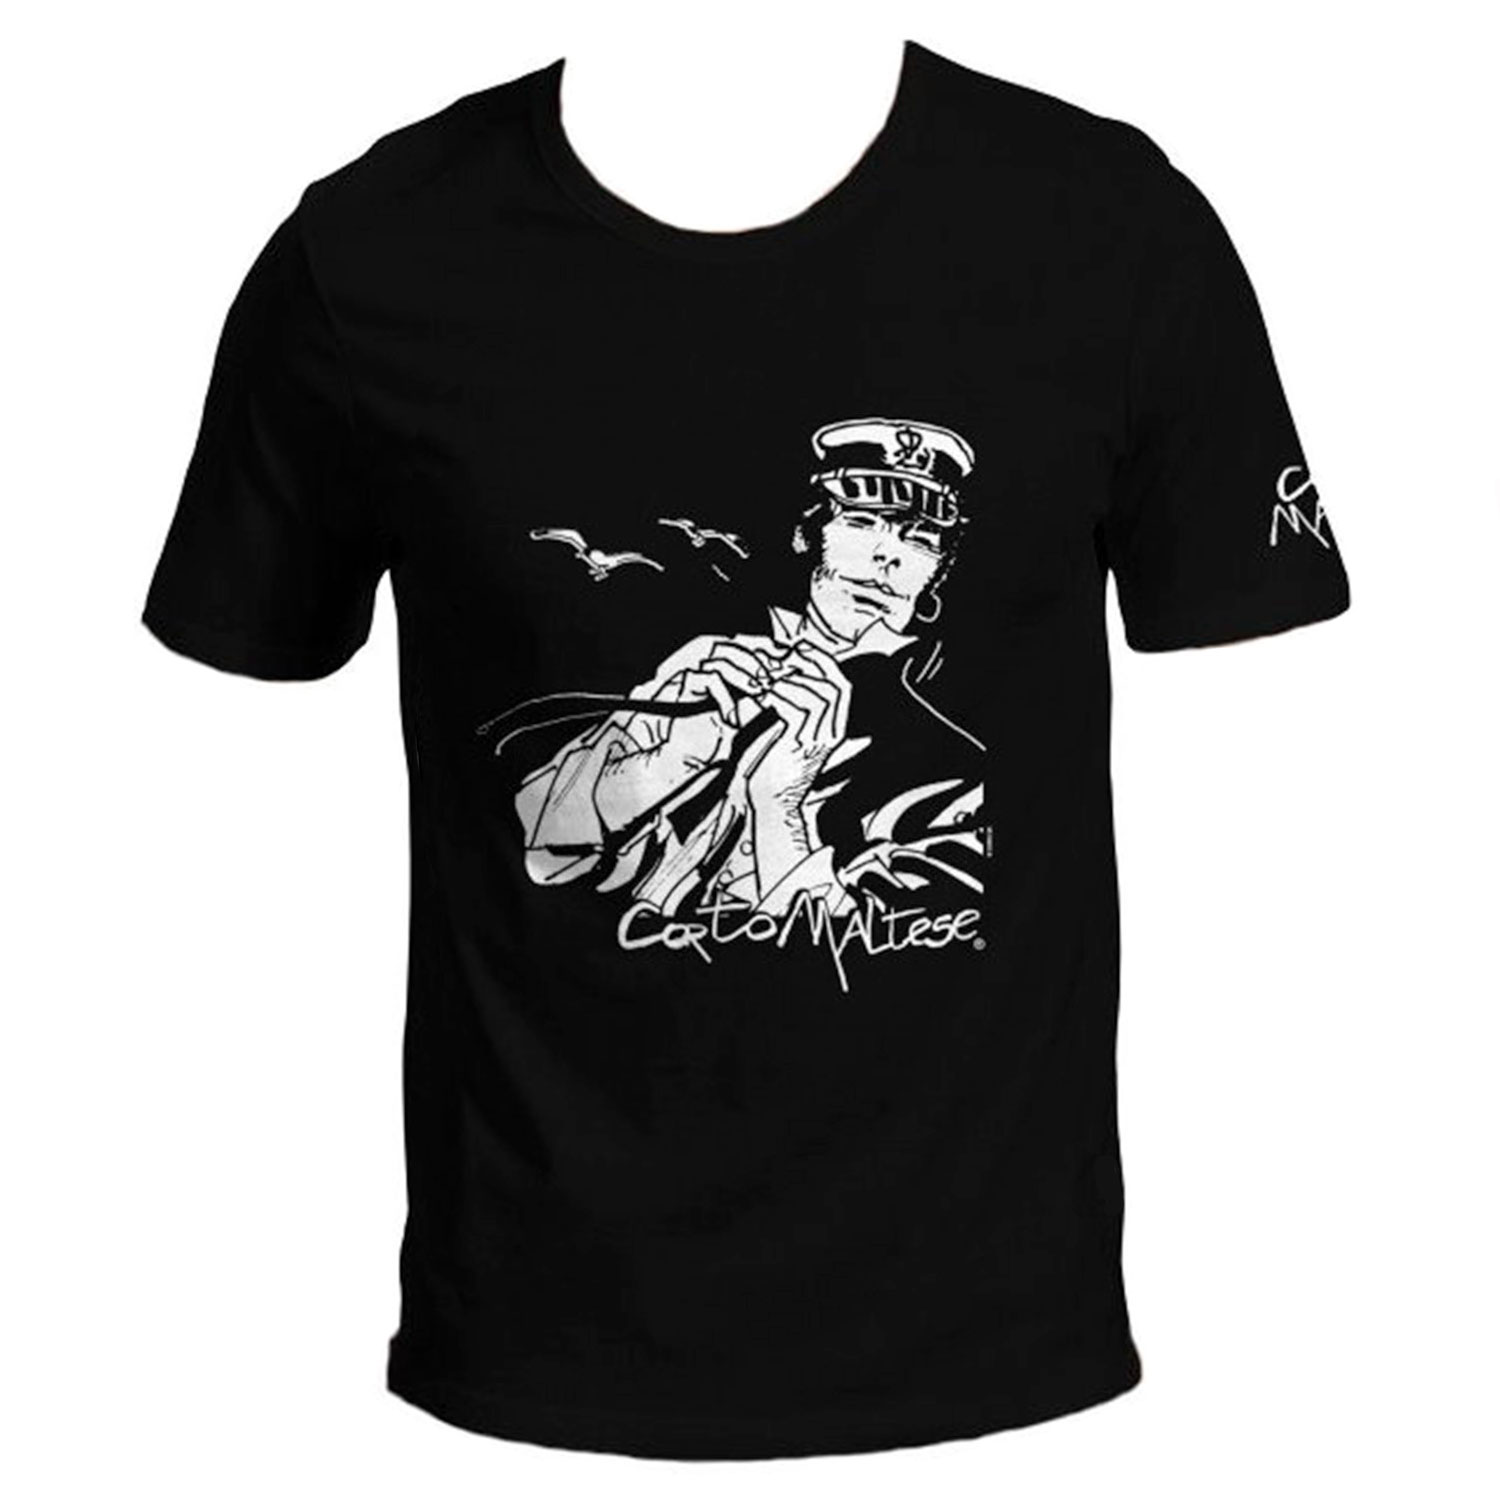 T-shirt Hugo Pratt : Corto Maltese nel vento - Nero - Taglia M